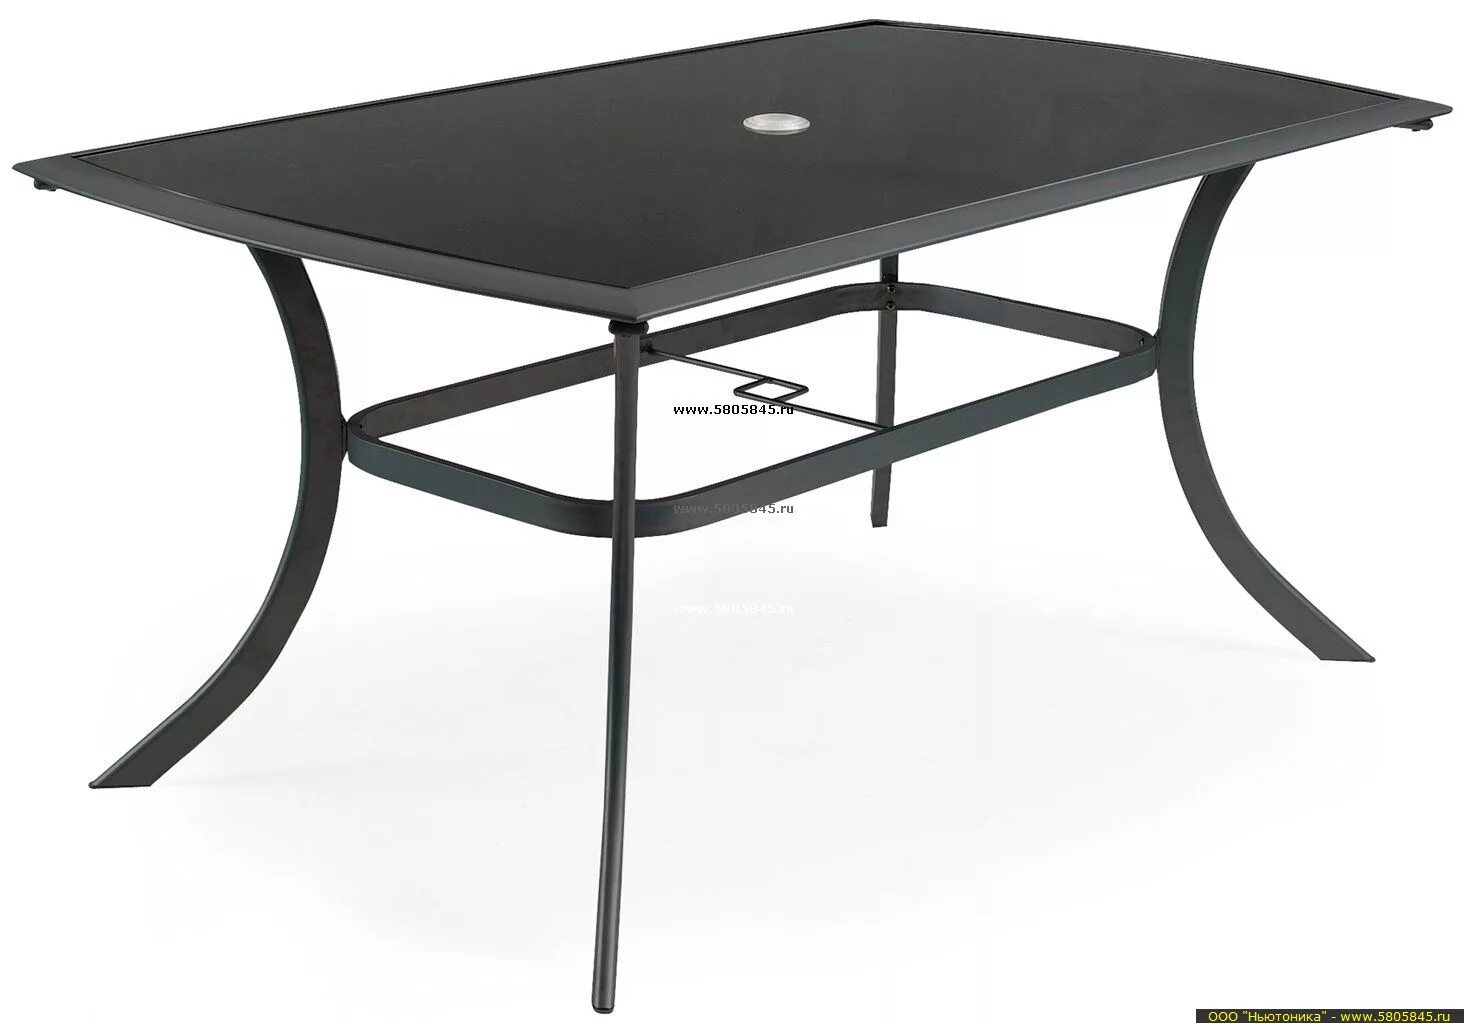 Каркасы кухонных столов. Стол для дачи Tarrington House Black 150x90x70 см. Лаго стол. С1212 стол для сада Андреа стекло/металл. Кофейный стол Лаго.